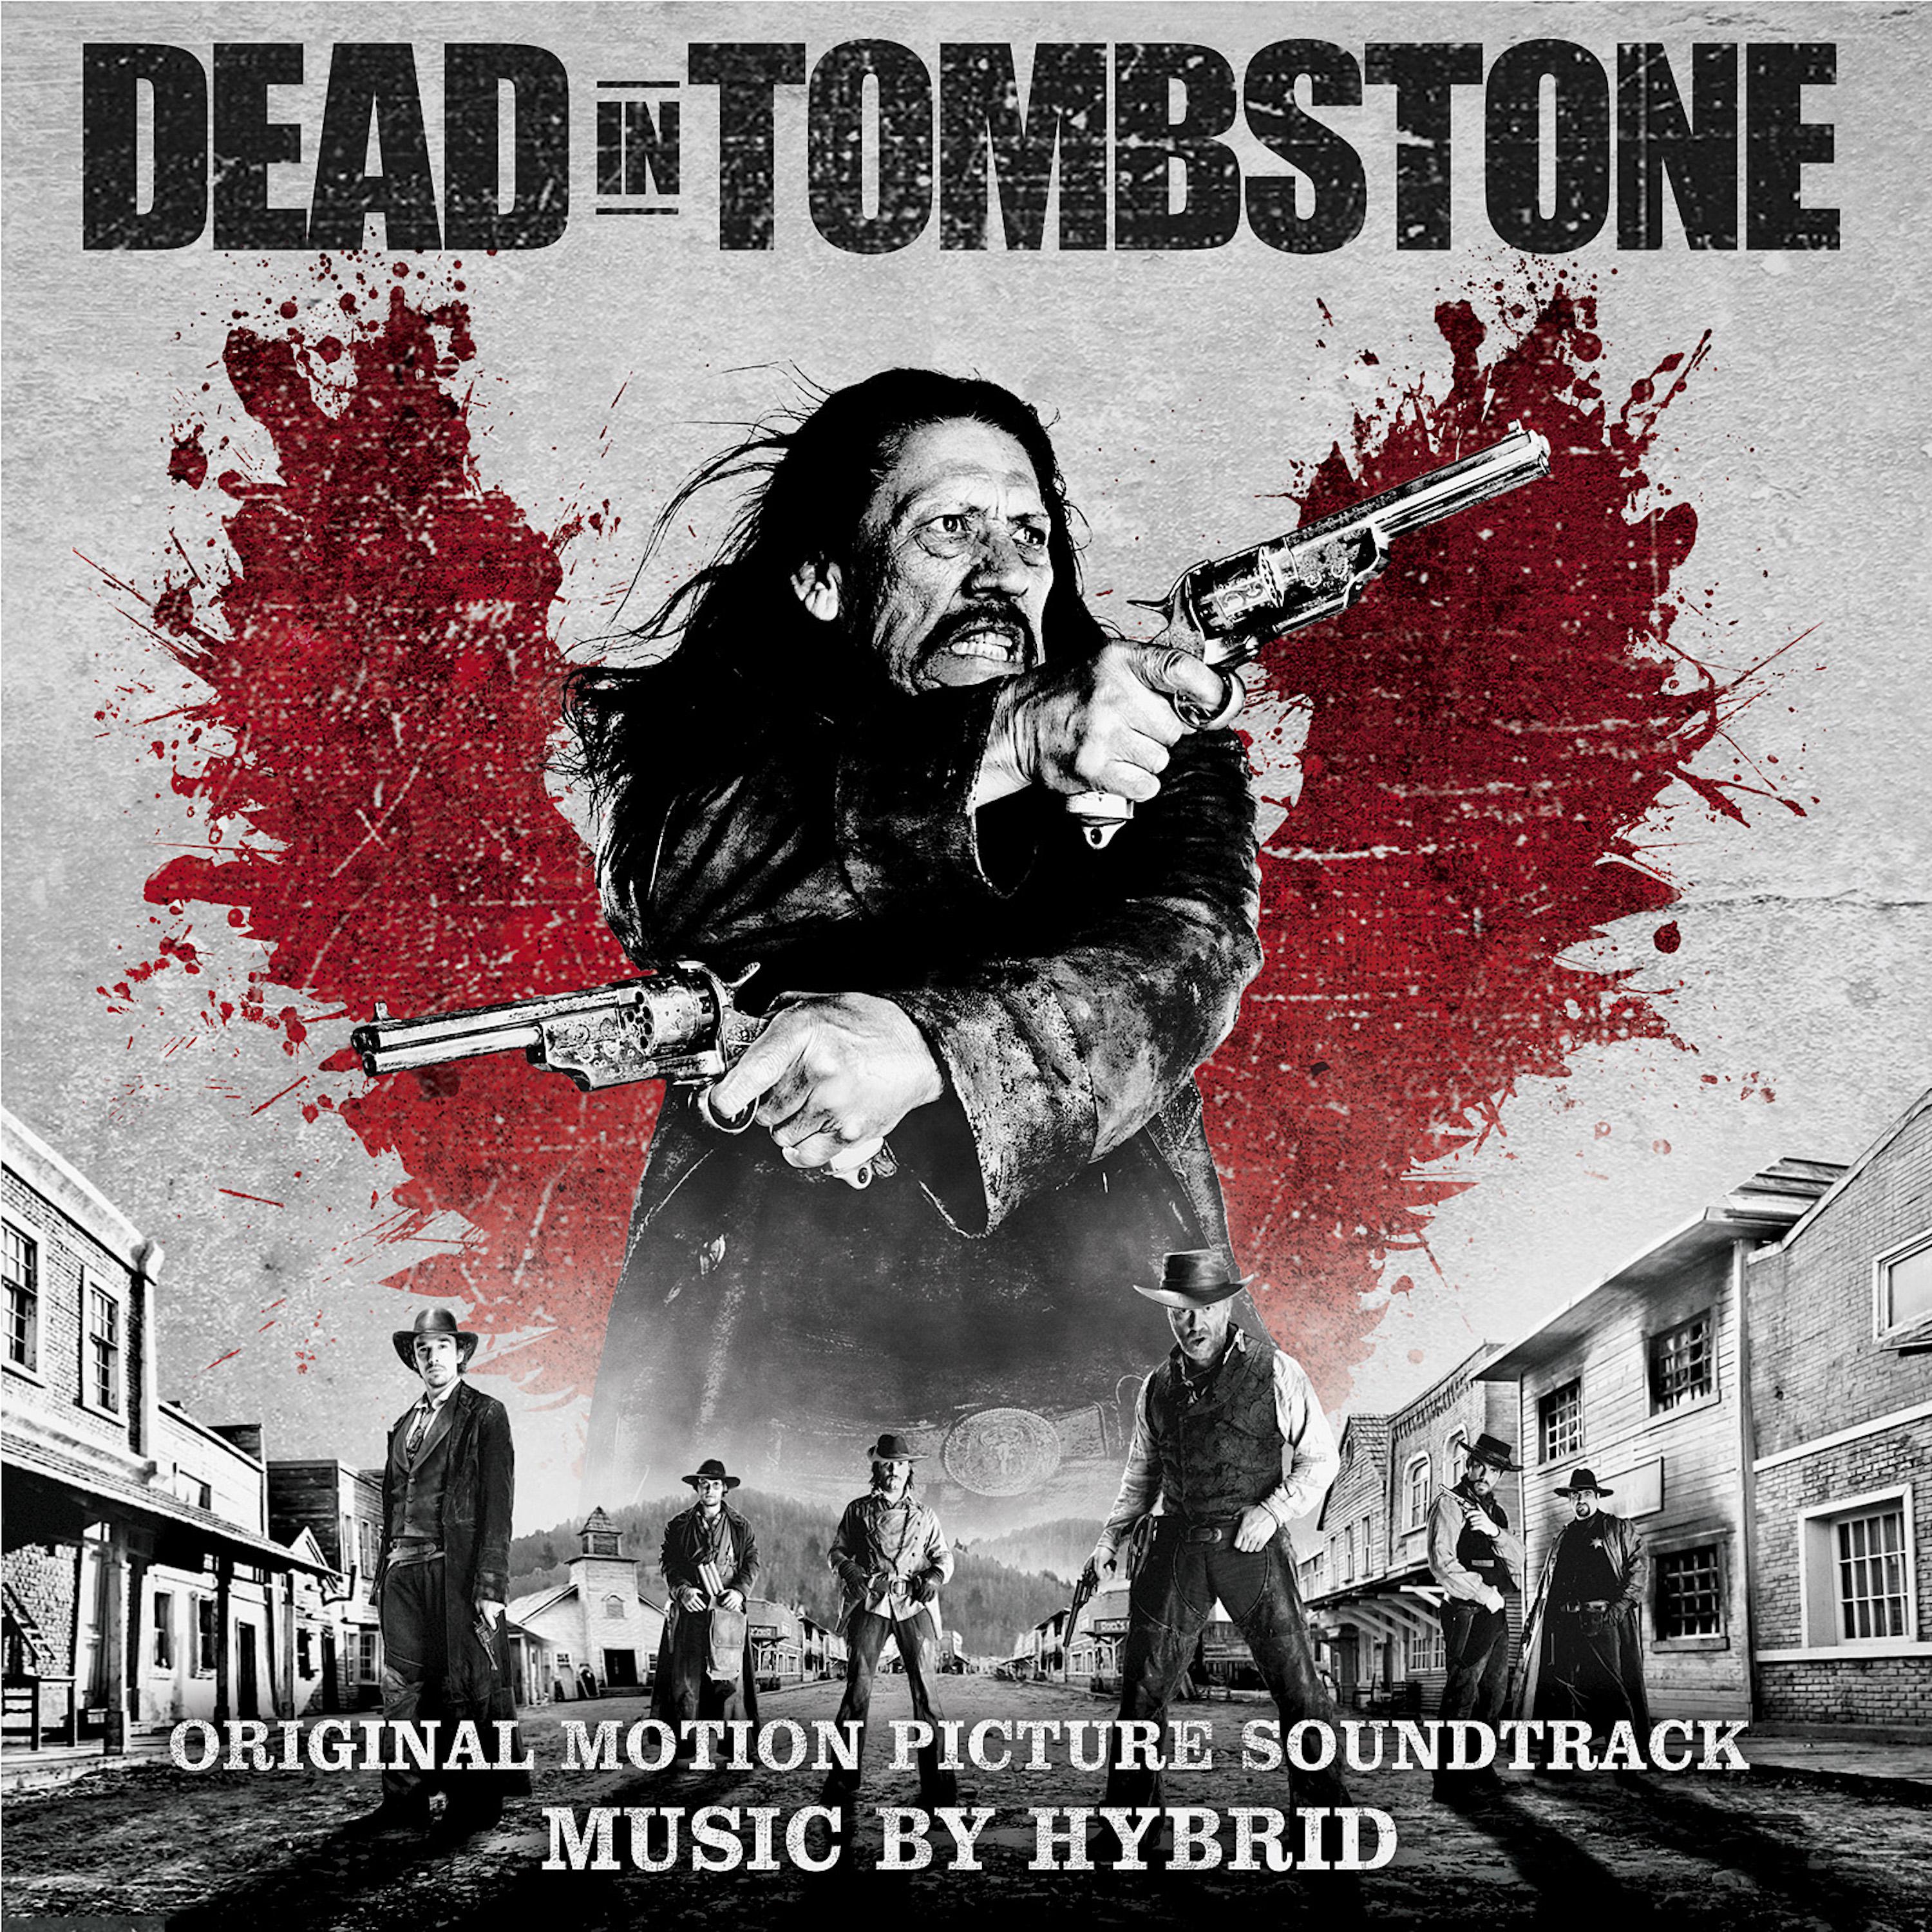 Beat the Devil's Tattoo (Hybrid Dead in Tombstone Mix) саундтрек к какому фильму